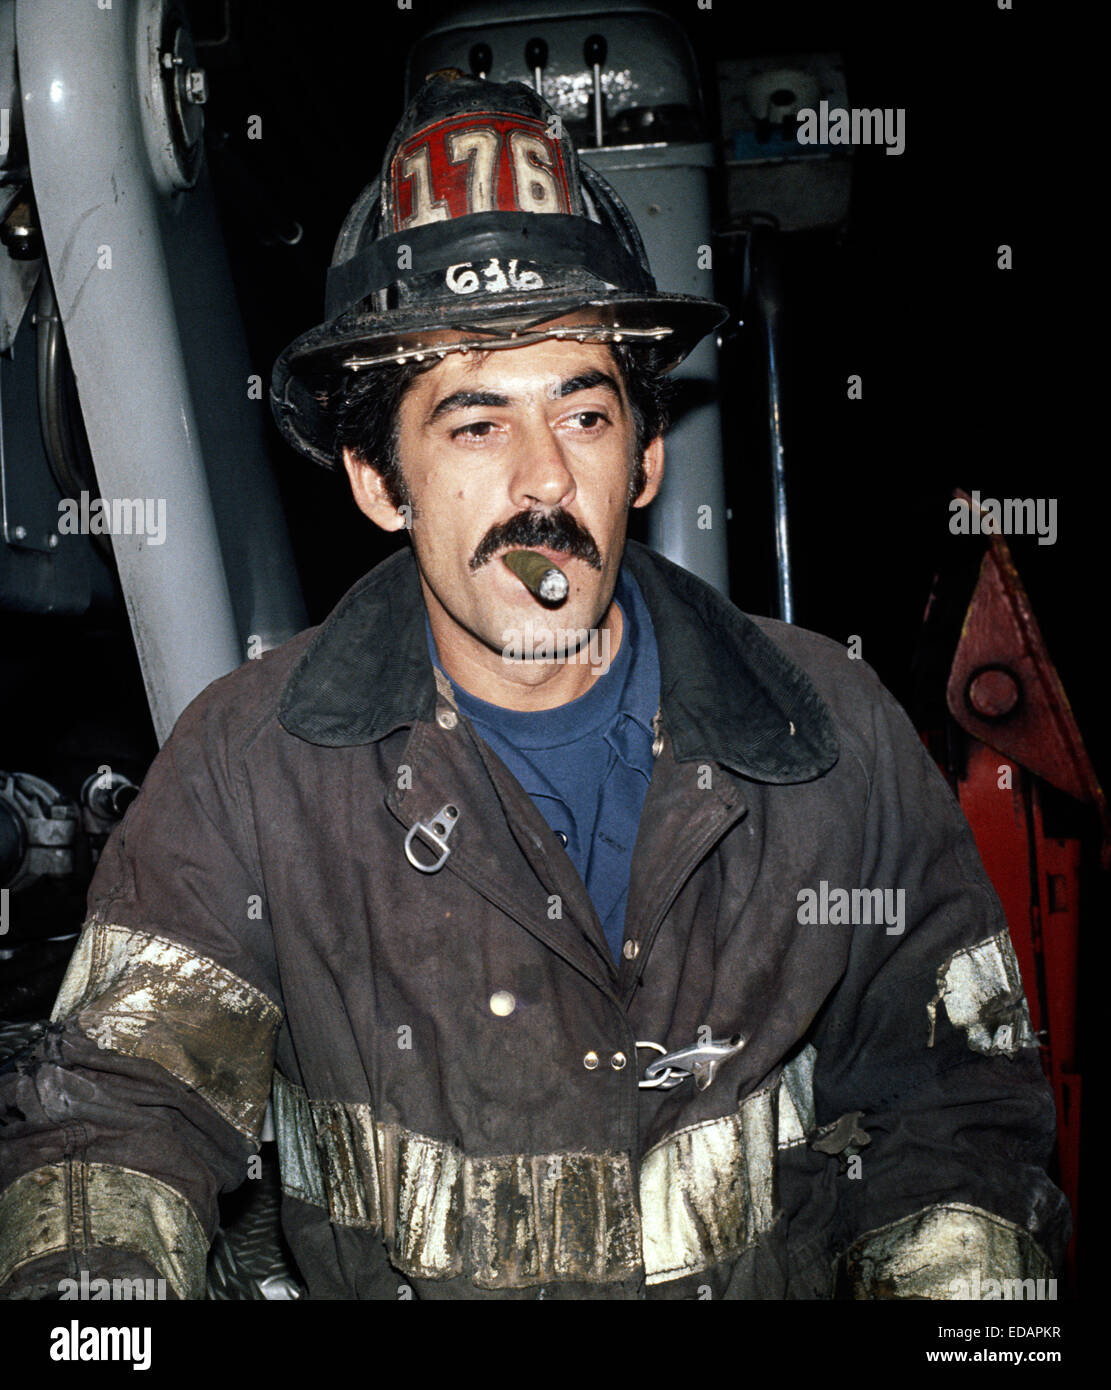 USA, SOUTH BRONX, NEW YORK CITY - AUGUST 1977. New York City Fireman in the South Bronx. Stock Photo